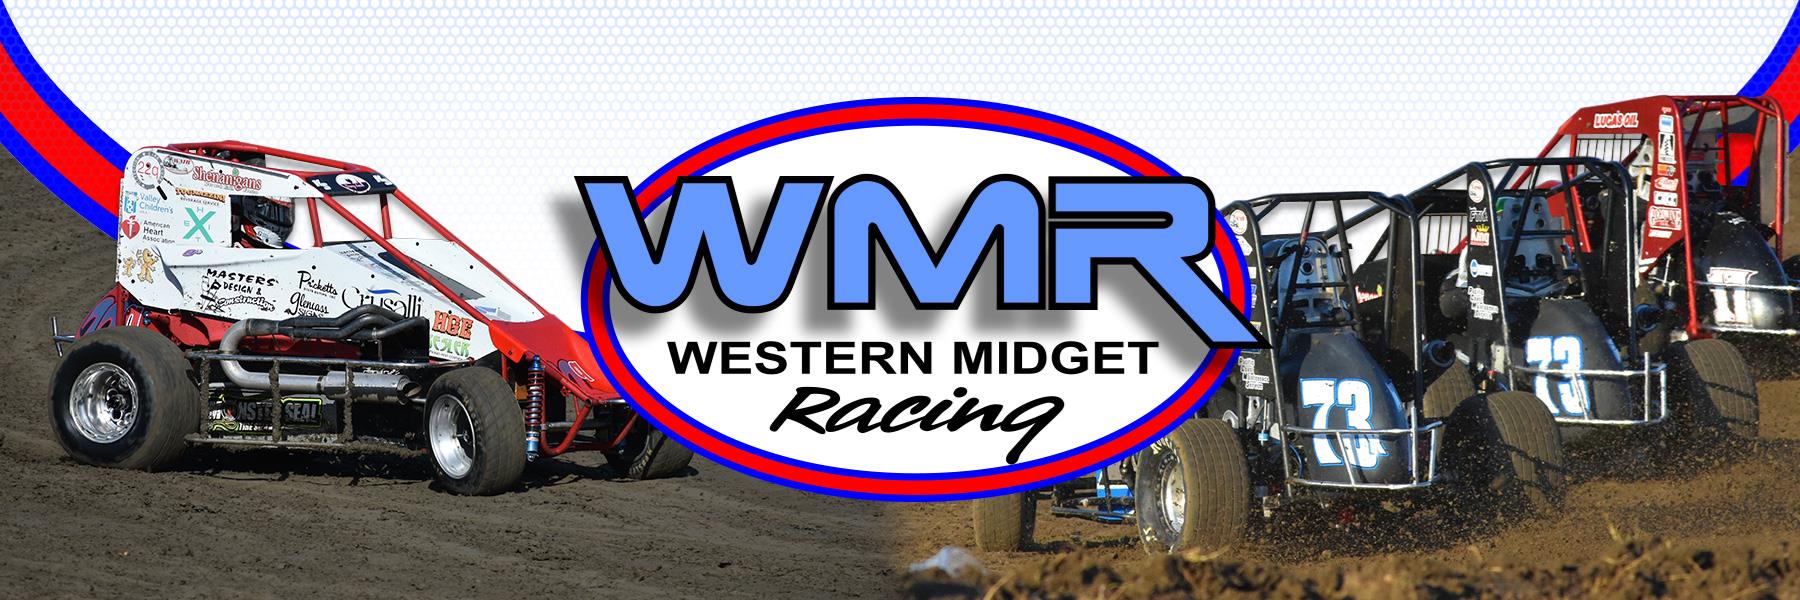 Western Midget Racing